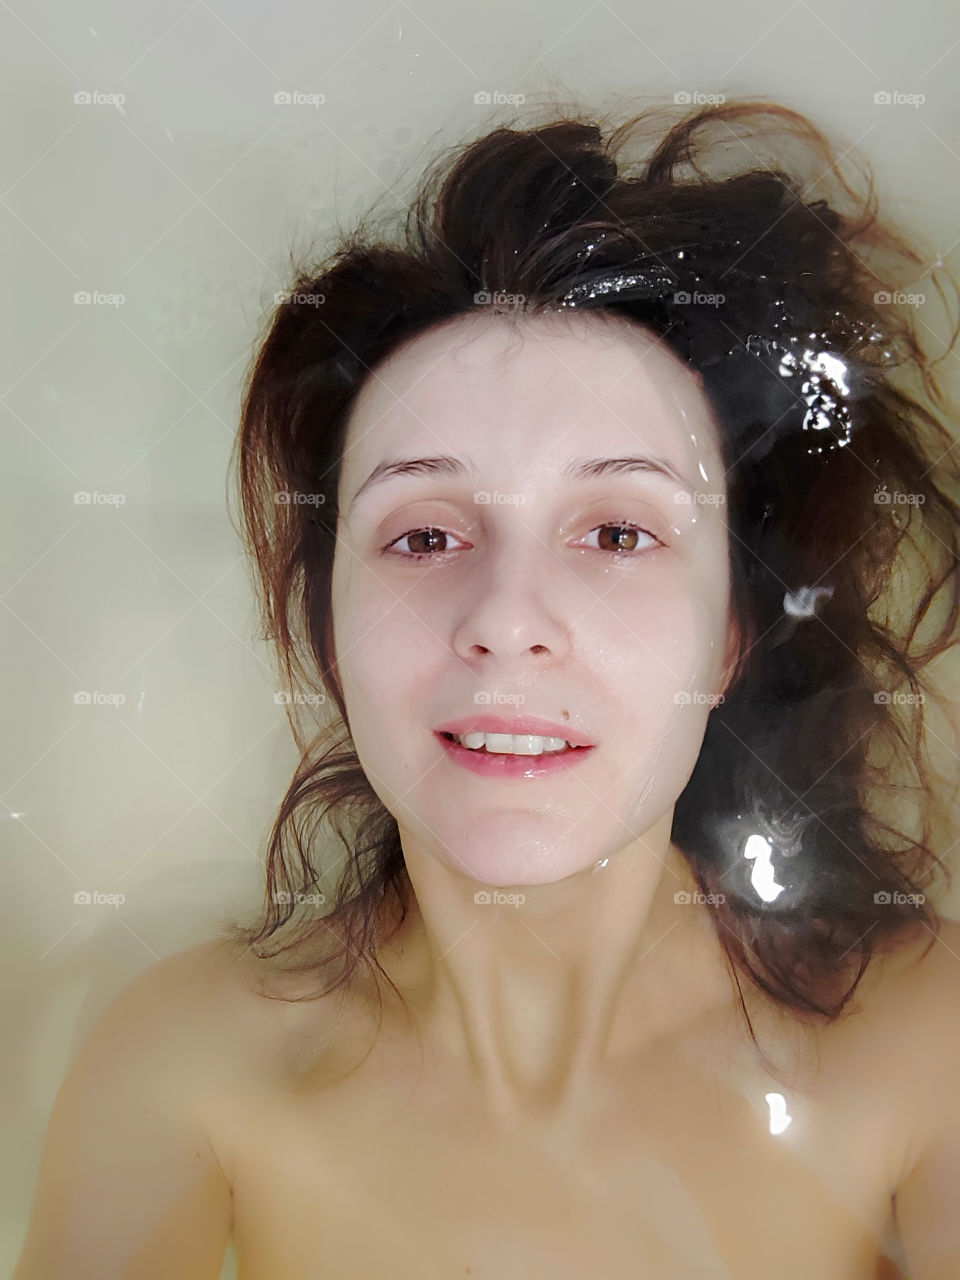 Girl in the bath portrait